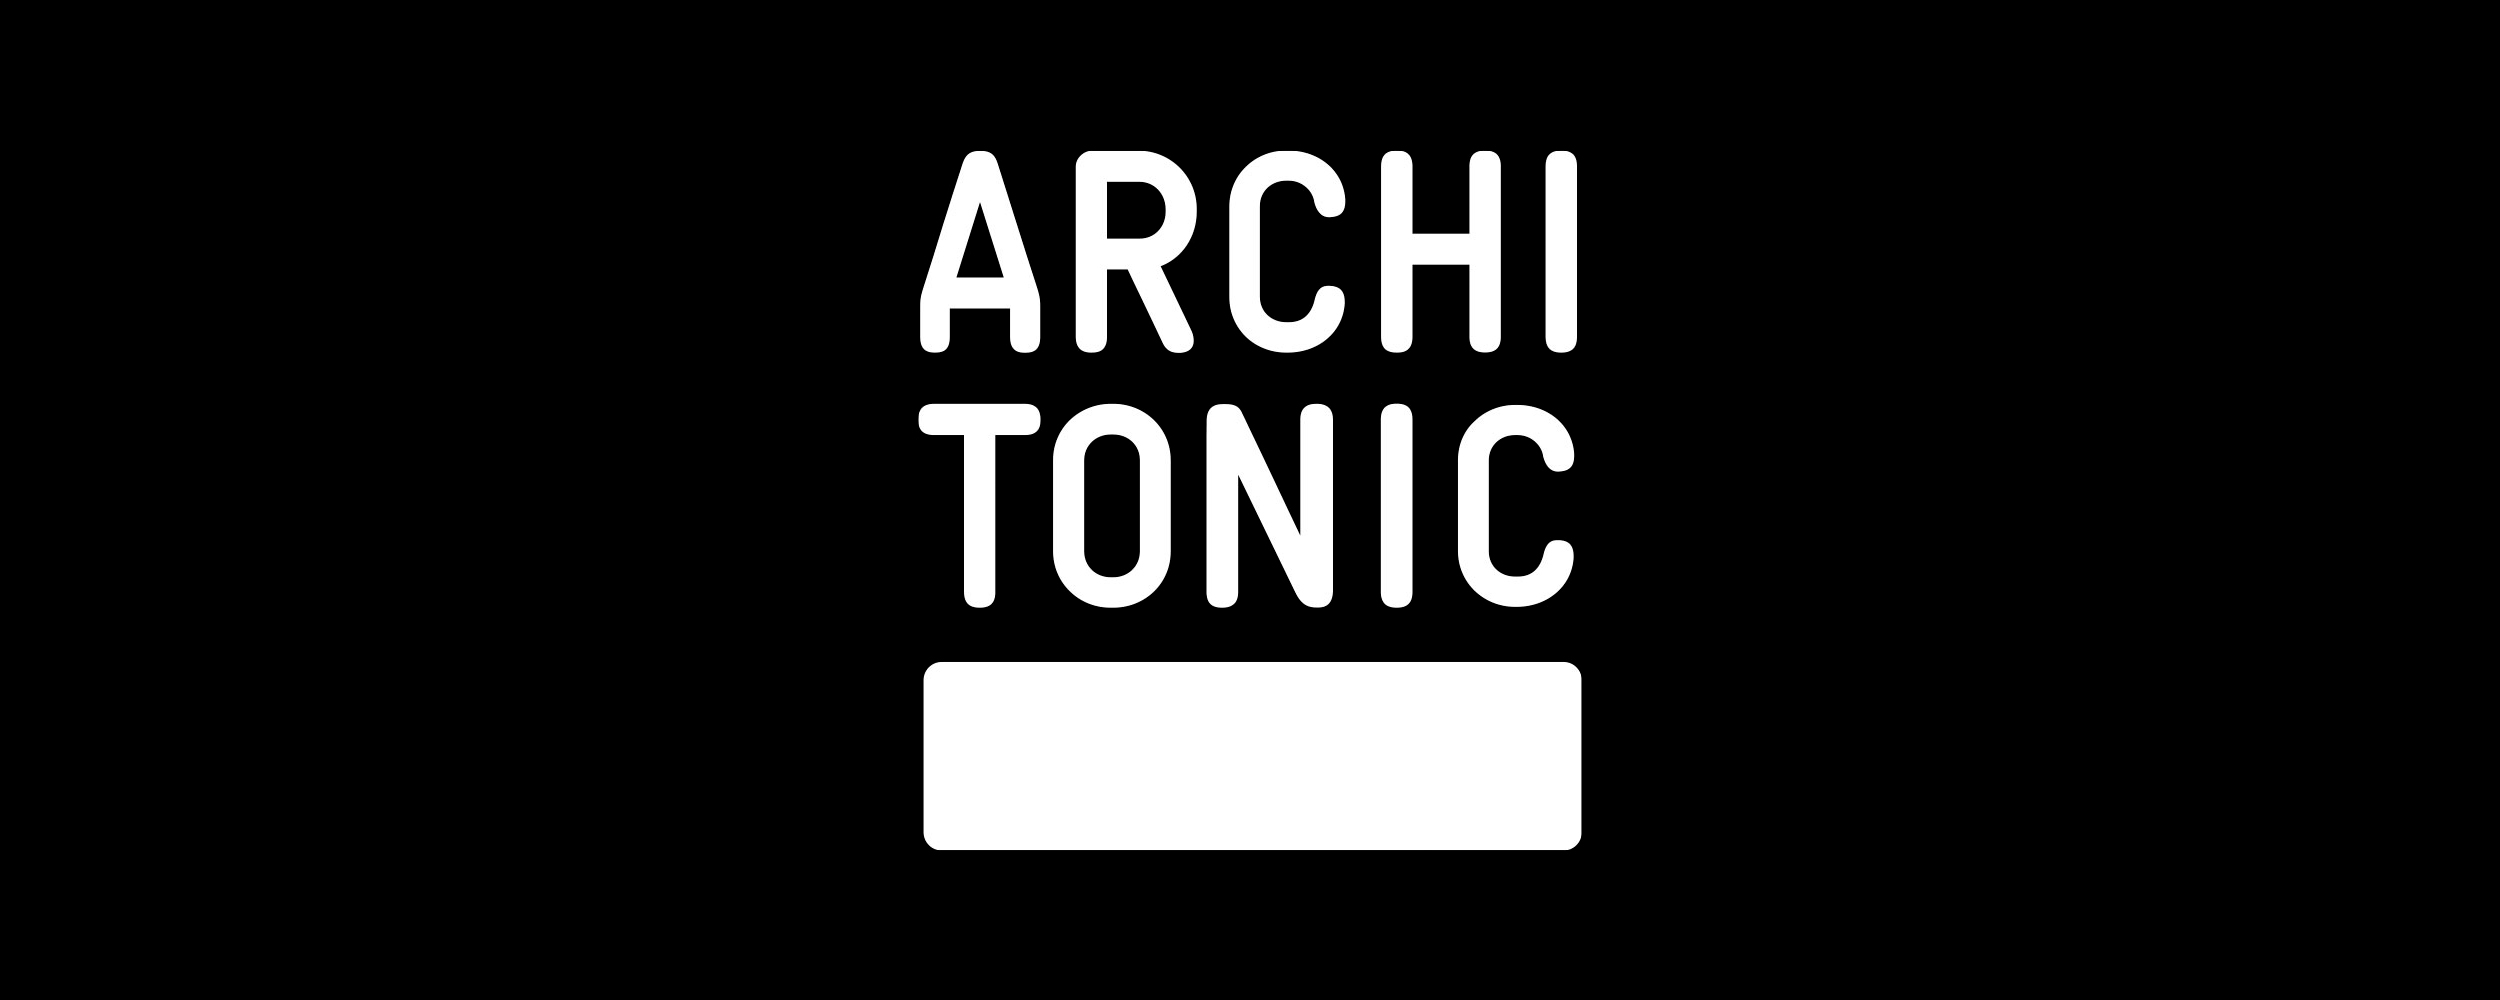 Akuart now on Architonic.com